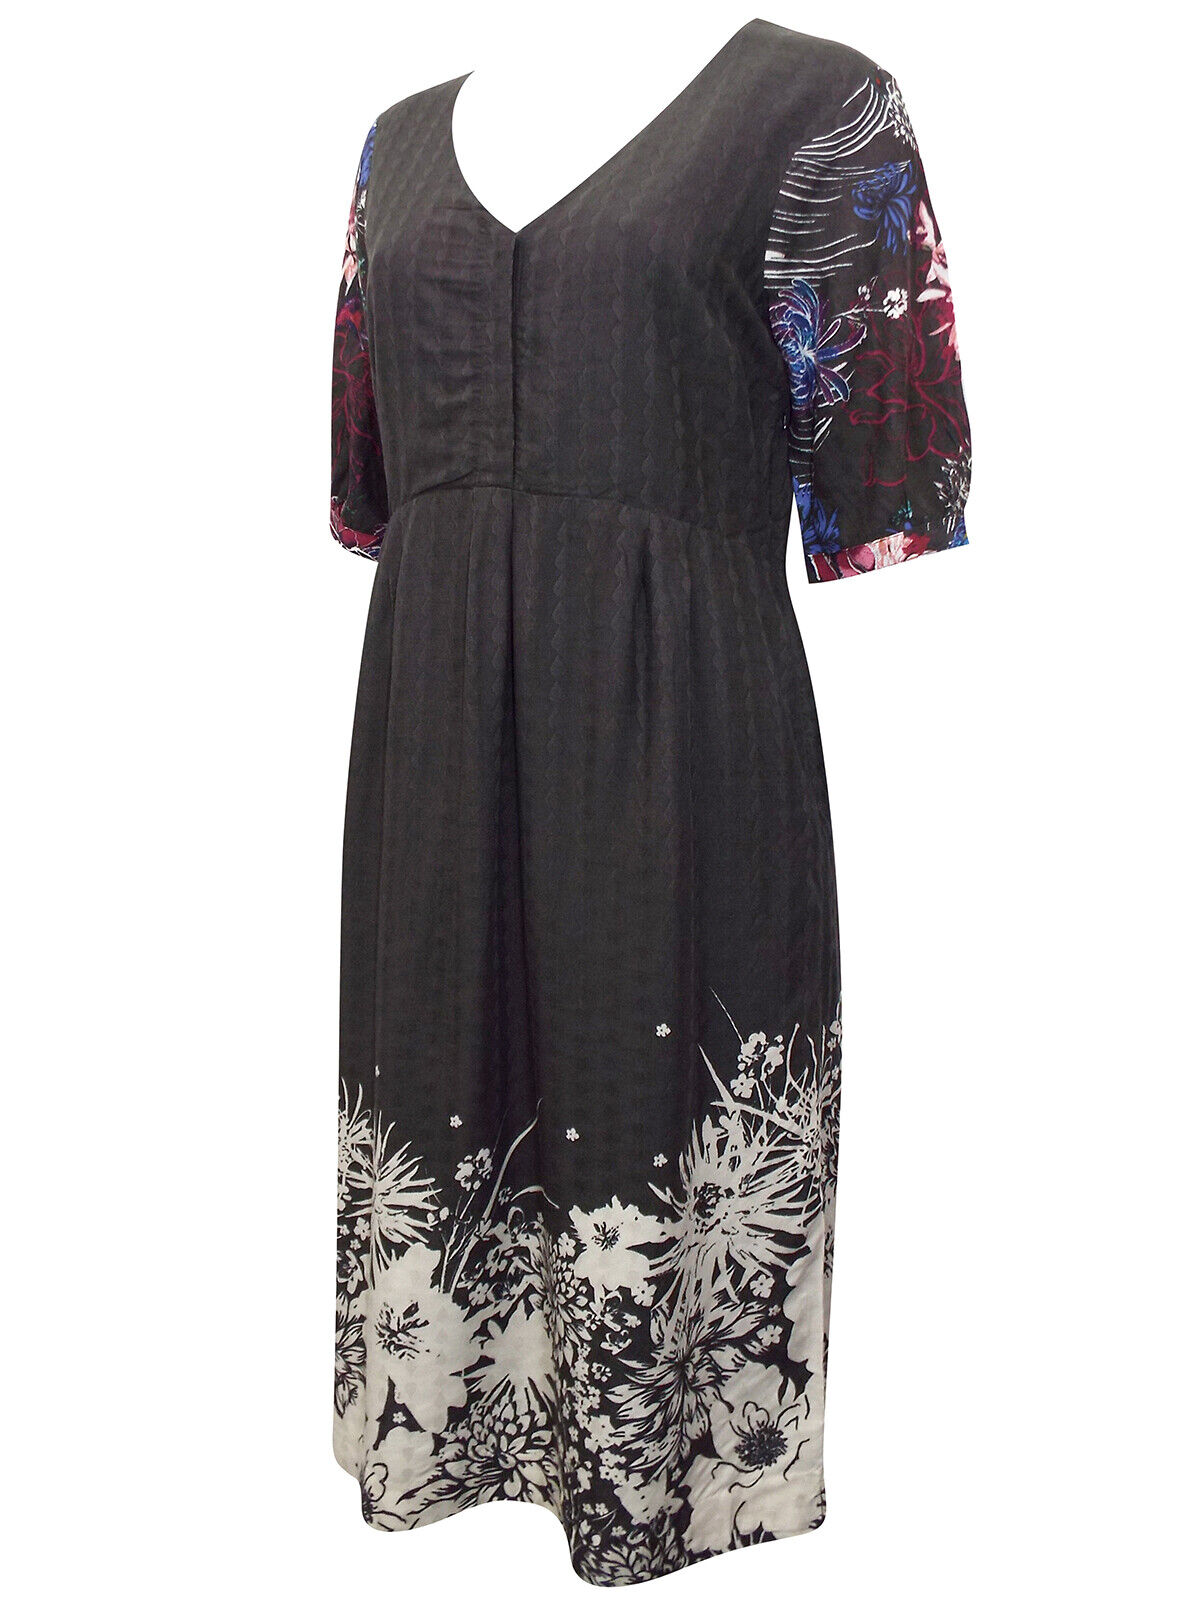 EX WHITE STUFF Charcoal Multi Print Erina OVERSIZED Woven Dress Size 10  RRP £75